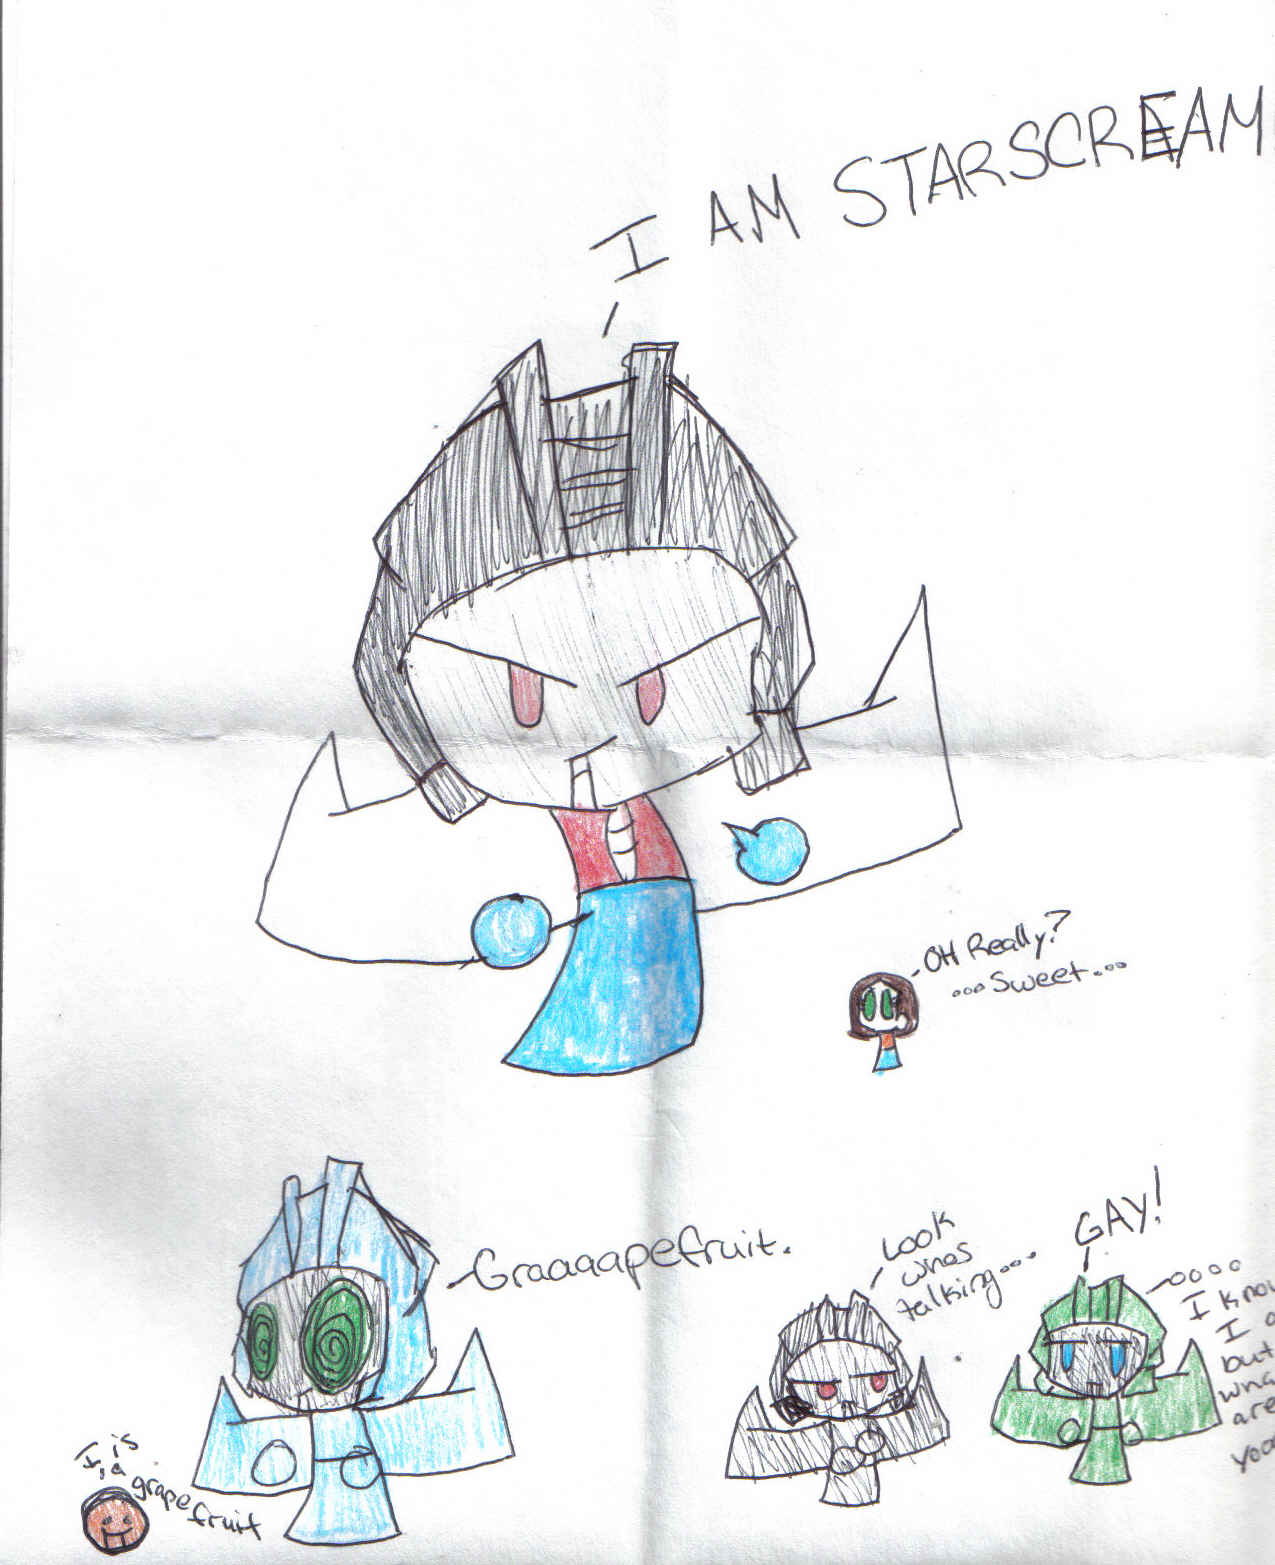 I IS STARSCREAM! by sonicbabe5